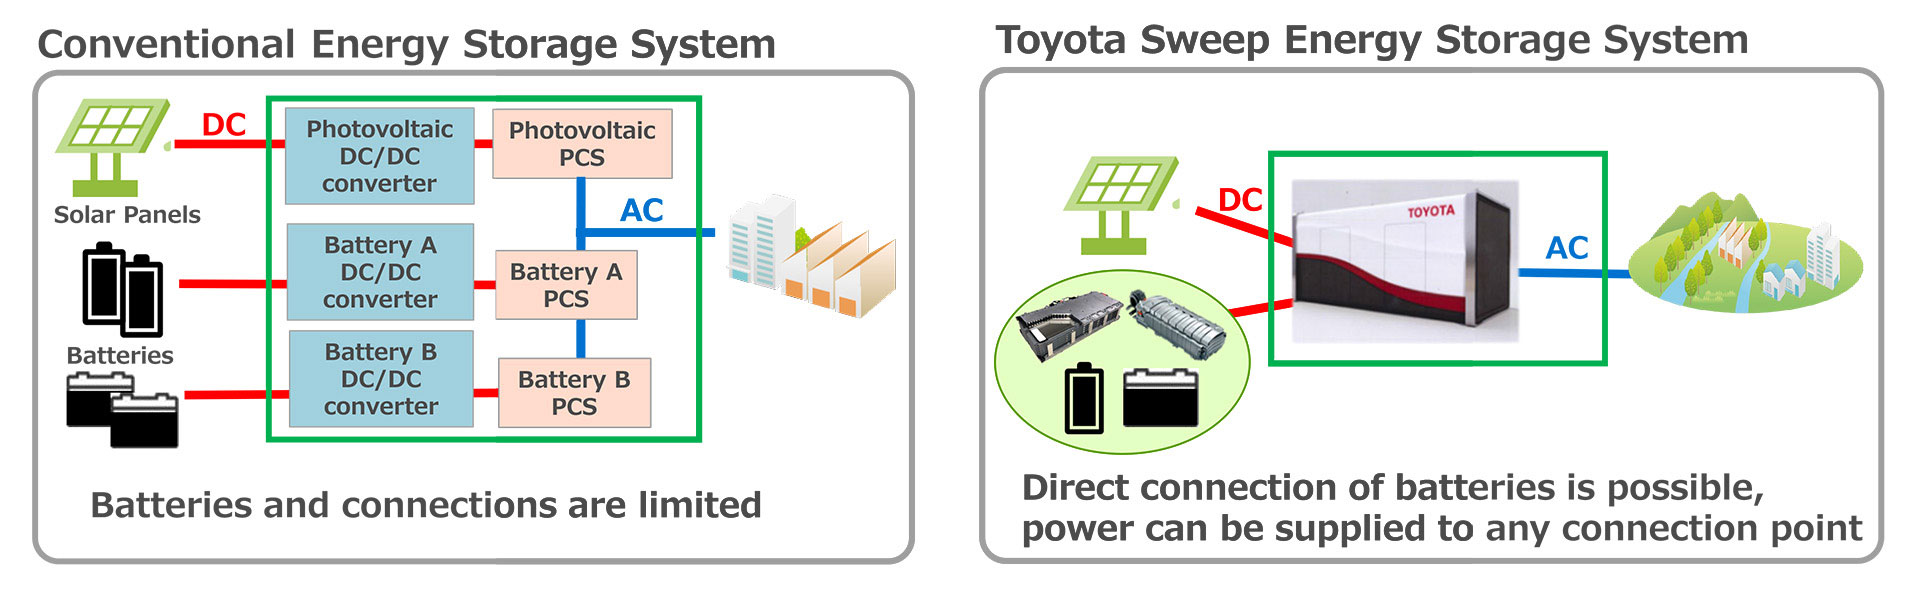 Toyota-Sweep-Energy-Storage-System